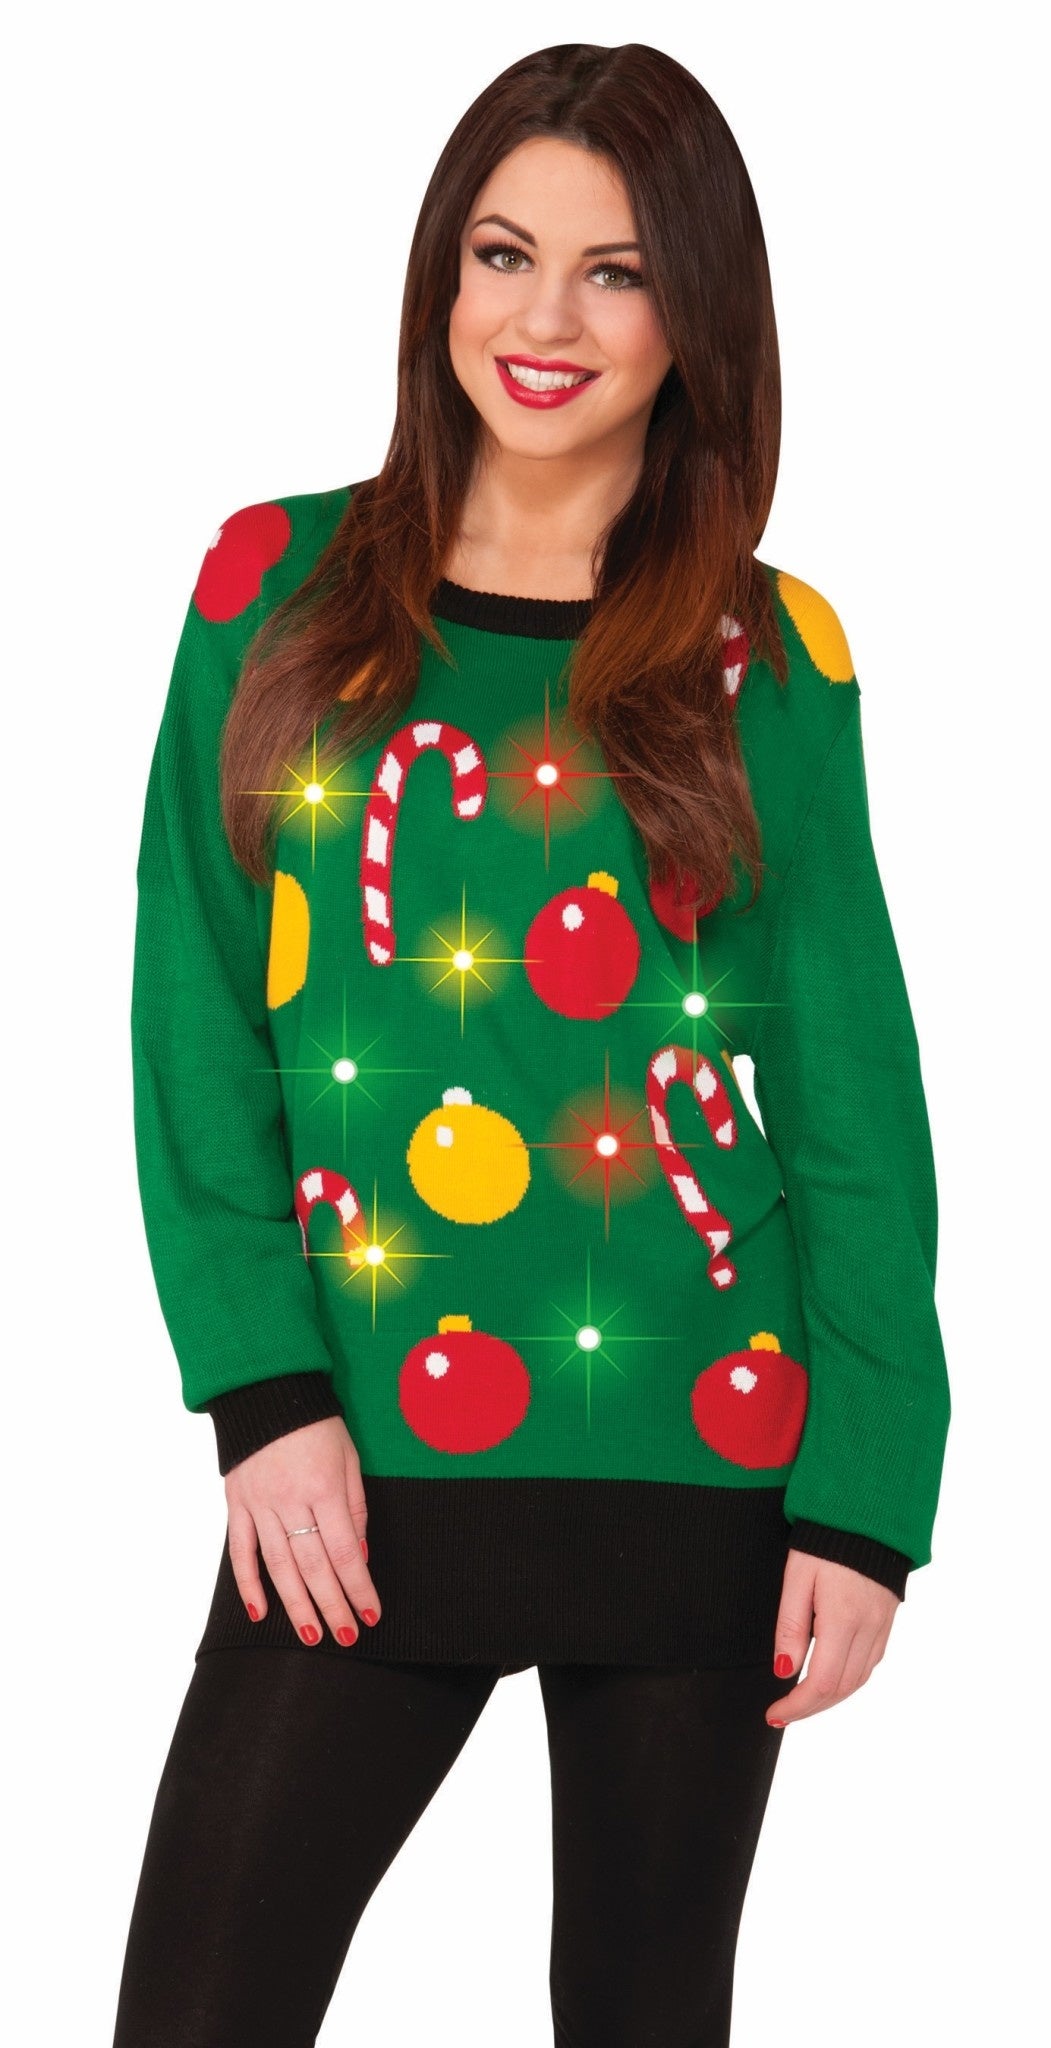 Tis the Season Light-Up Christmas Sweater